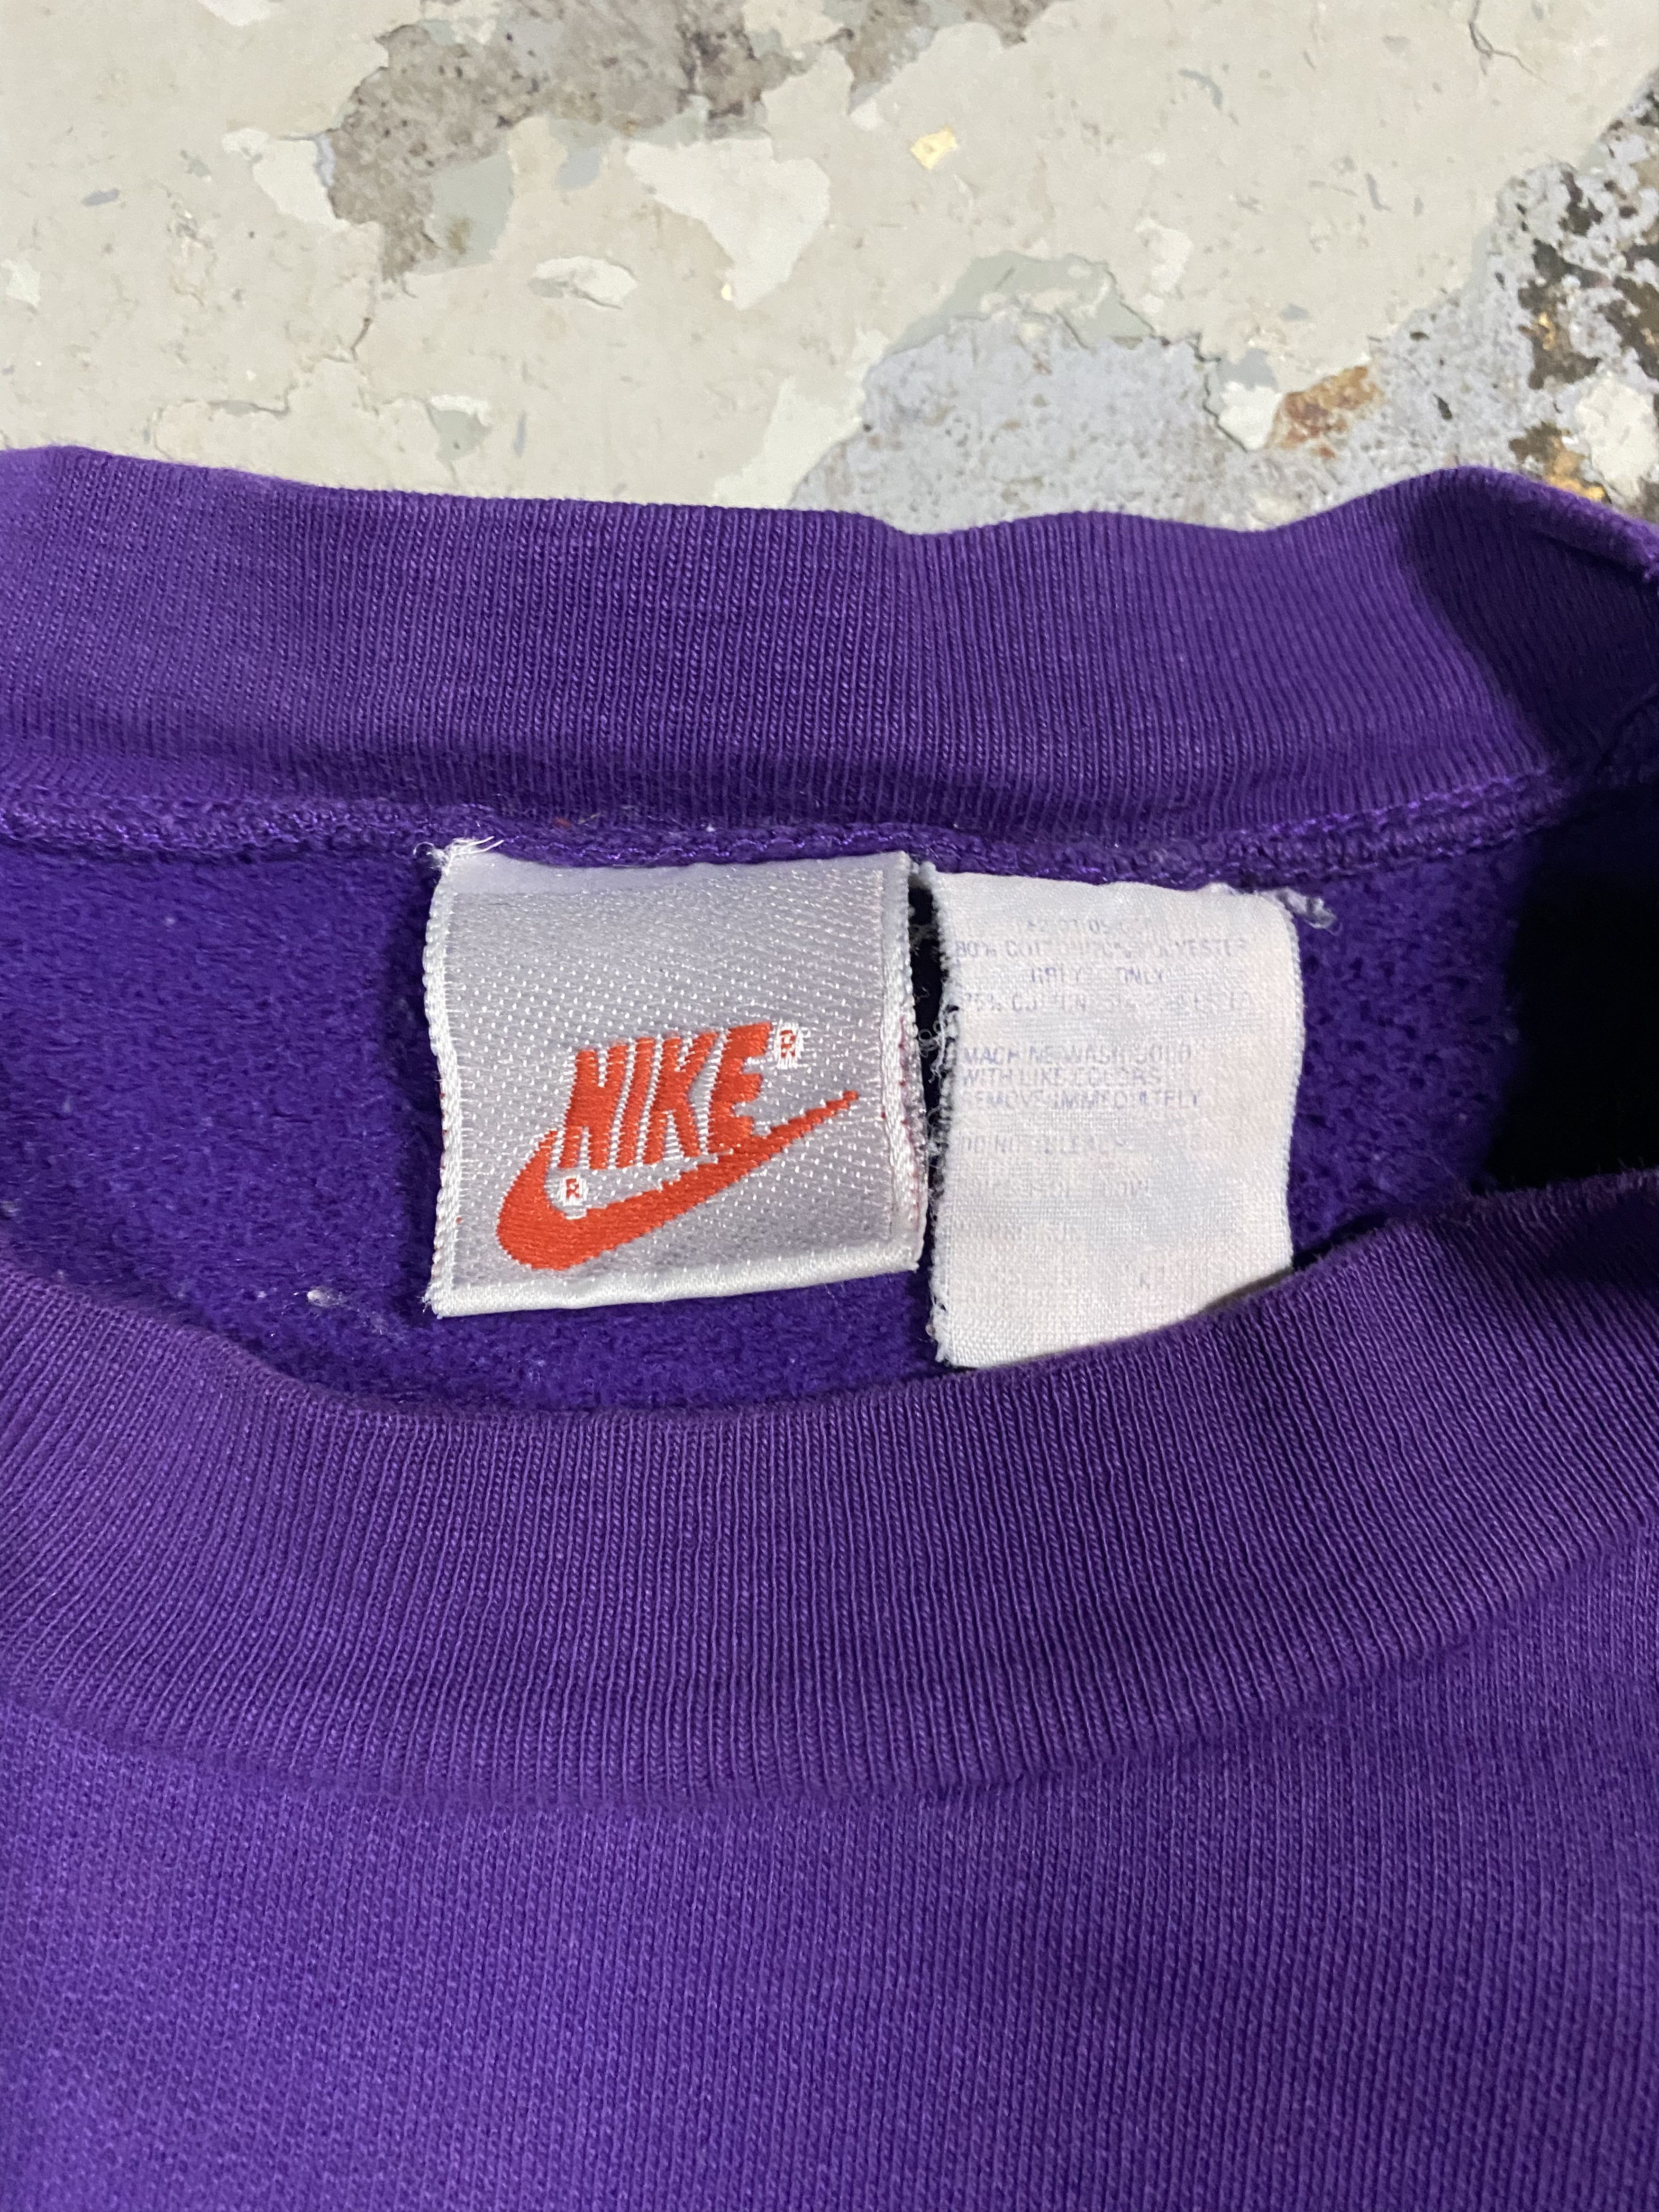 Nike Vintage Nike Sweatshirt Size US L / EU 52-54 / 3 - 5 Thumbnail